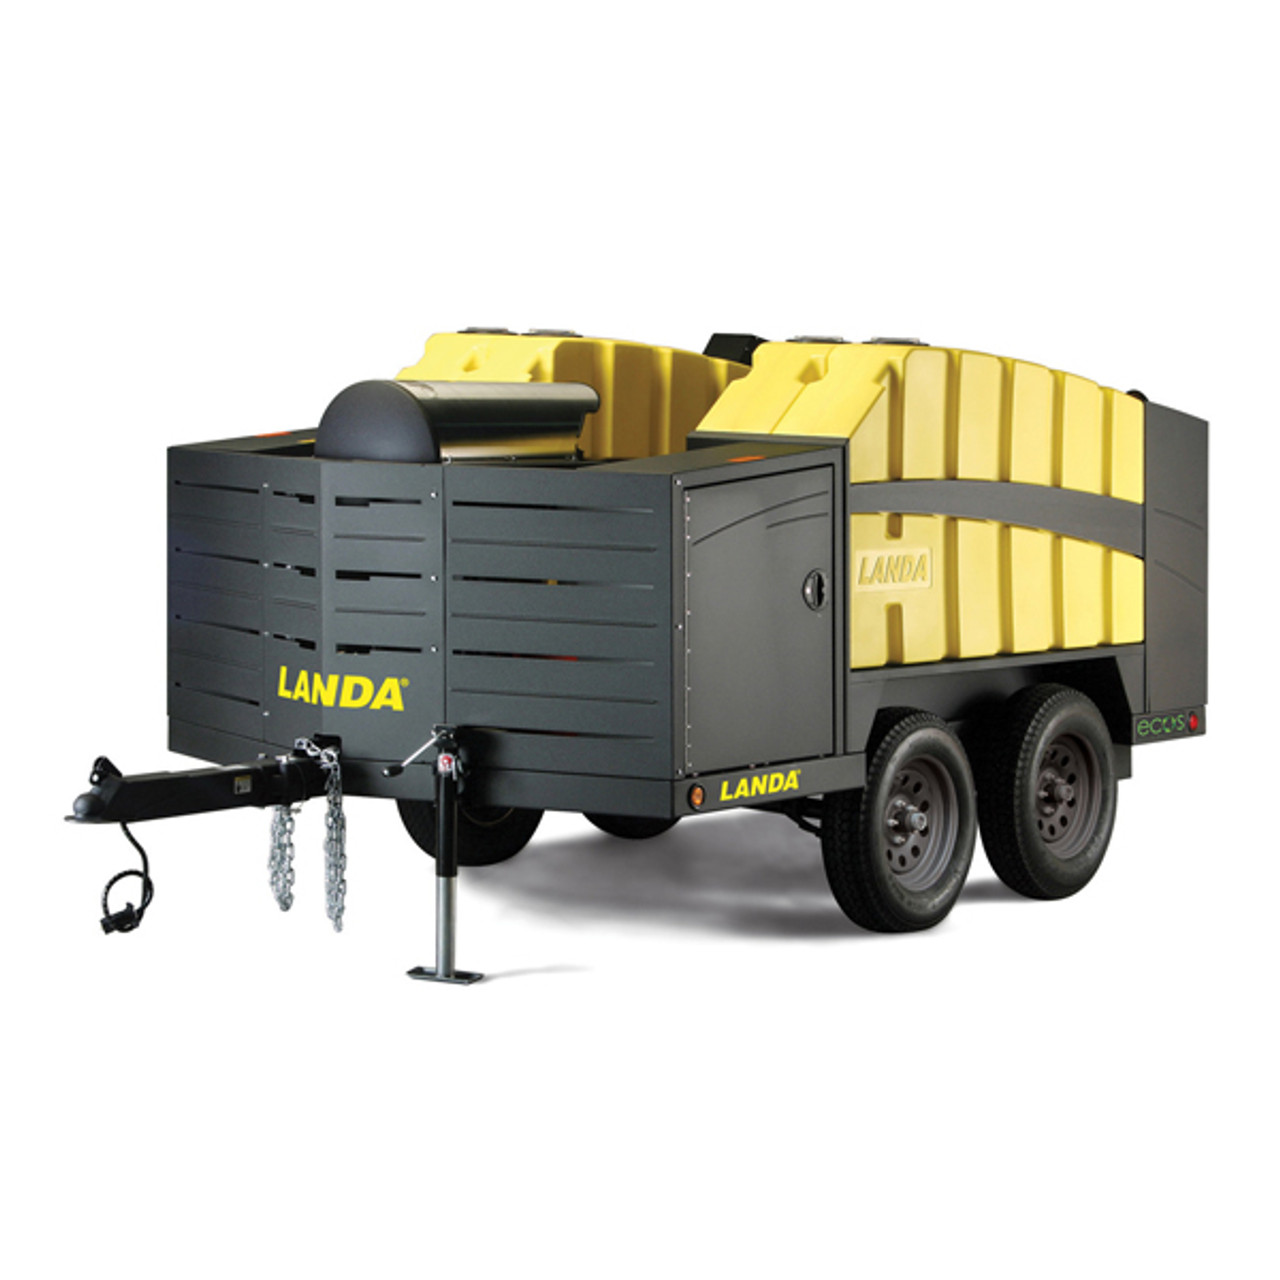 Landa - Ecos Series 7000 - Mobile Wash and Reclaim System